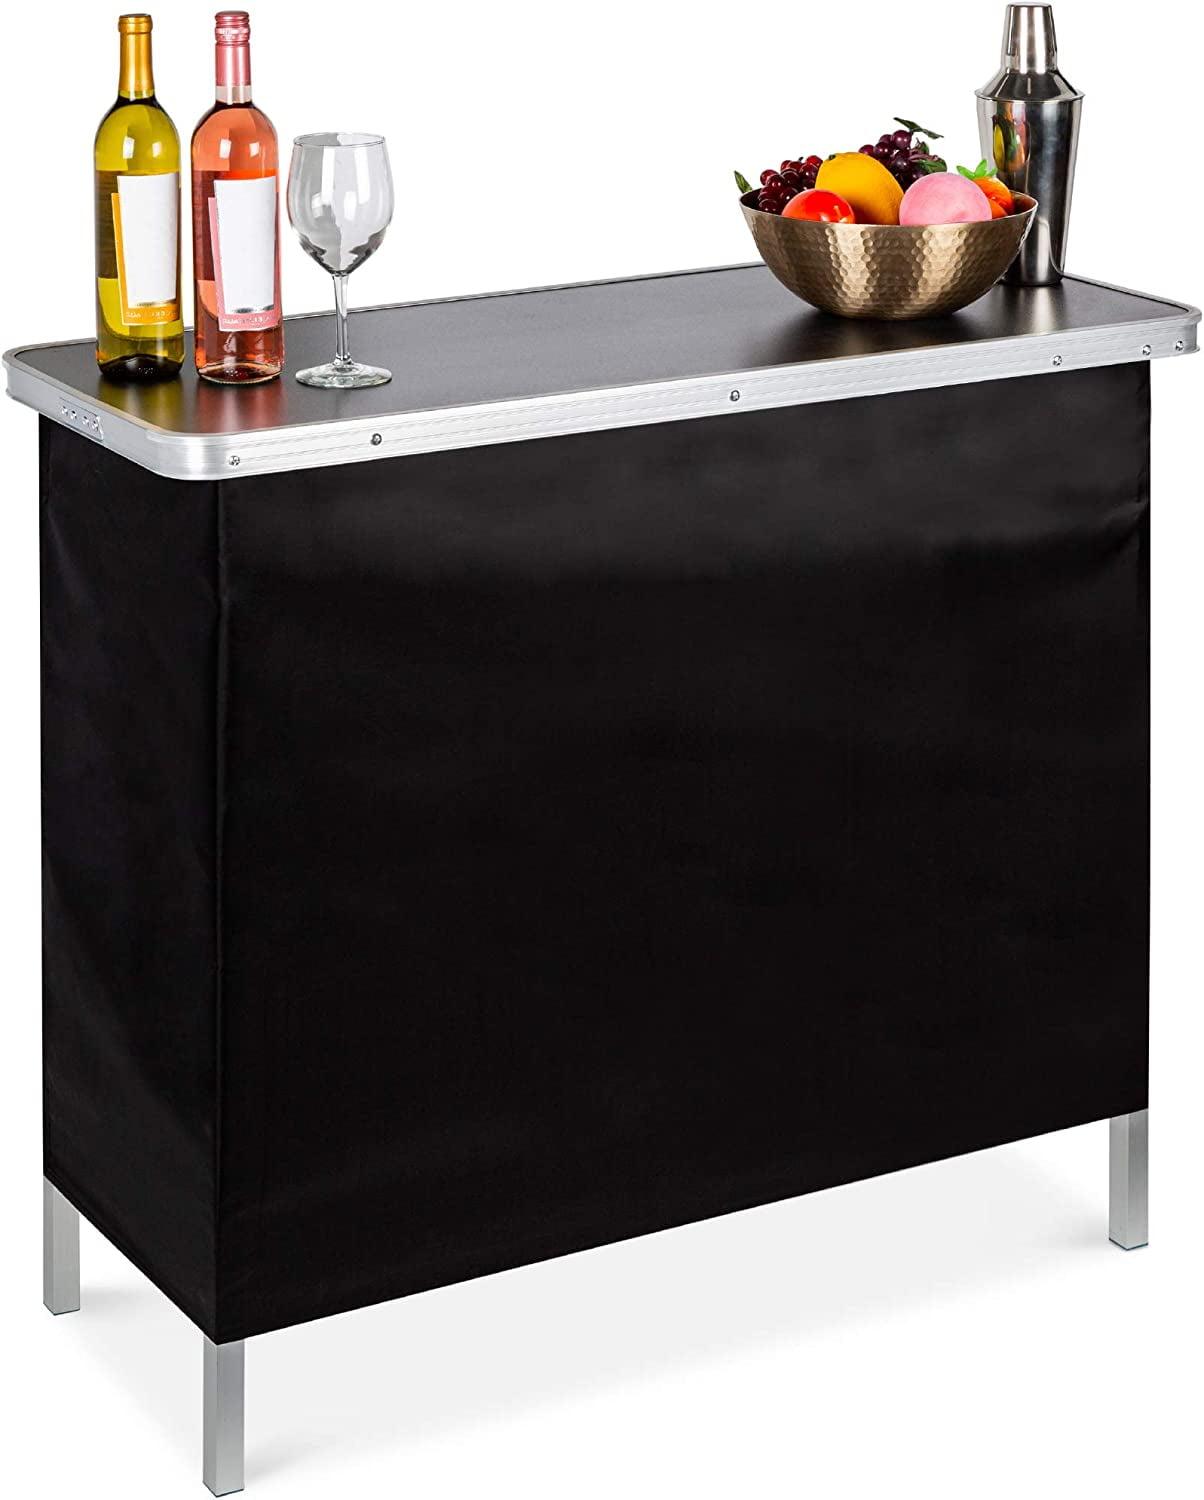 Sleek Black Portable Pop-Up Bar Table with Removable Skirt